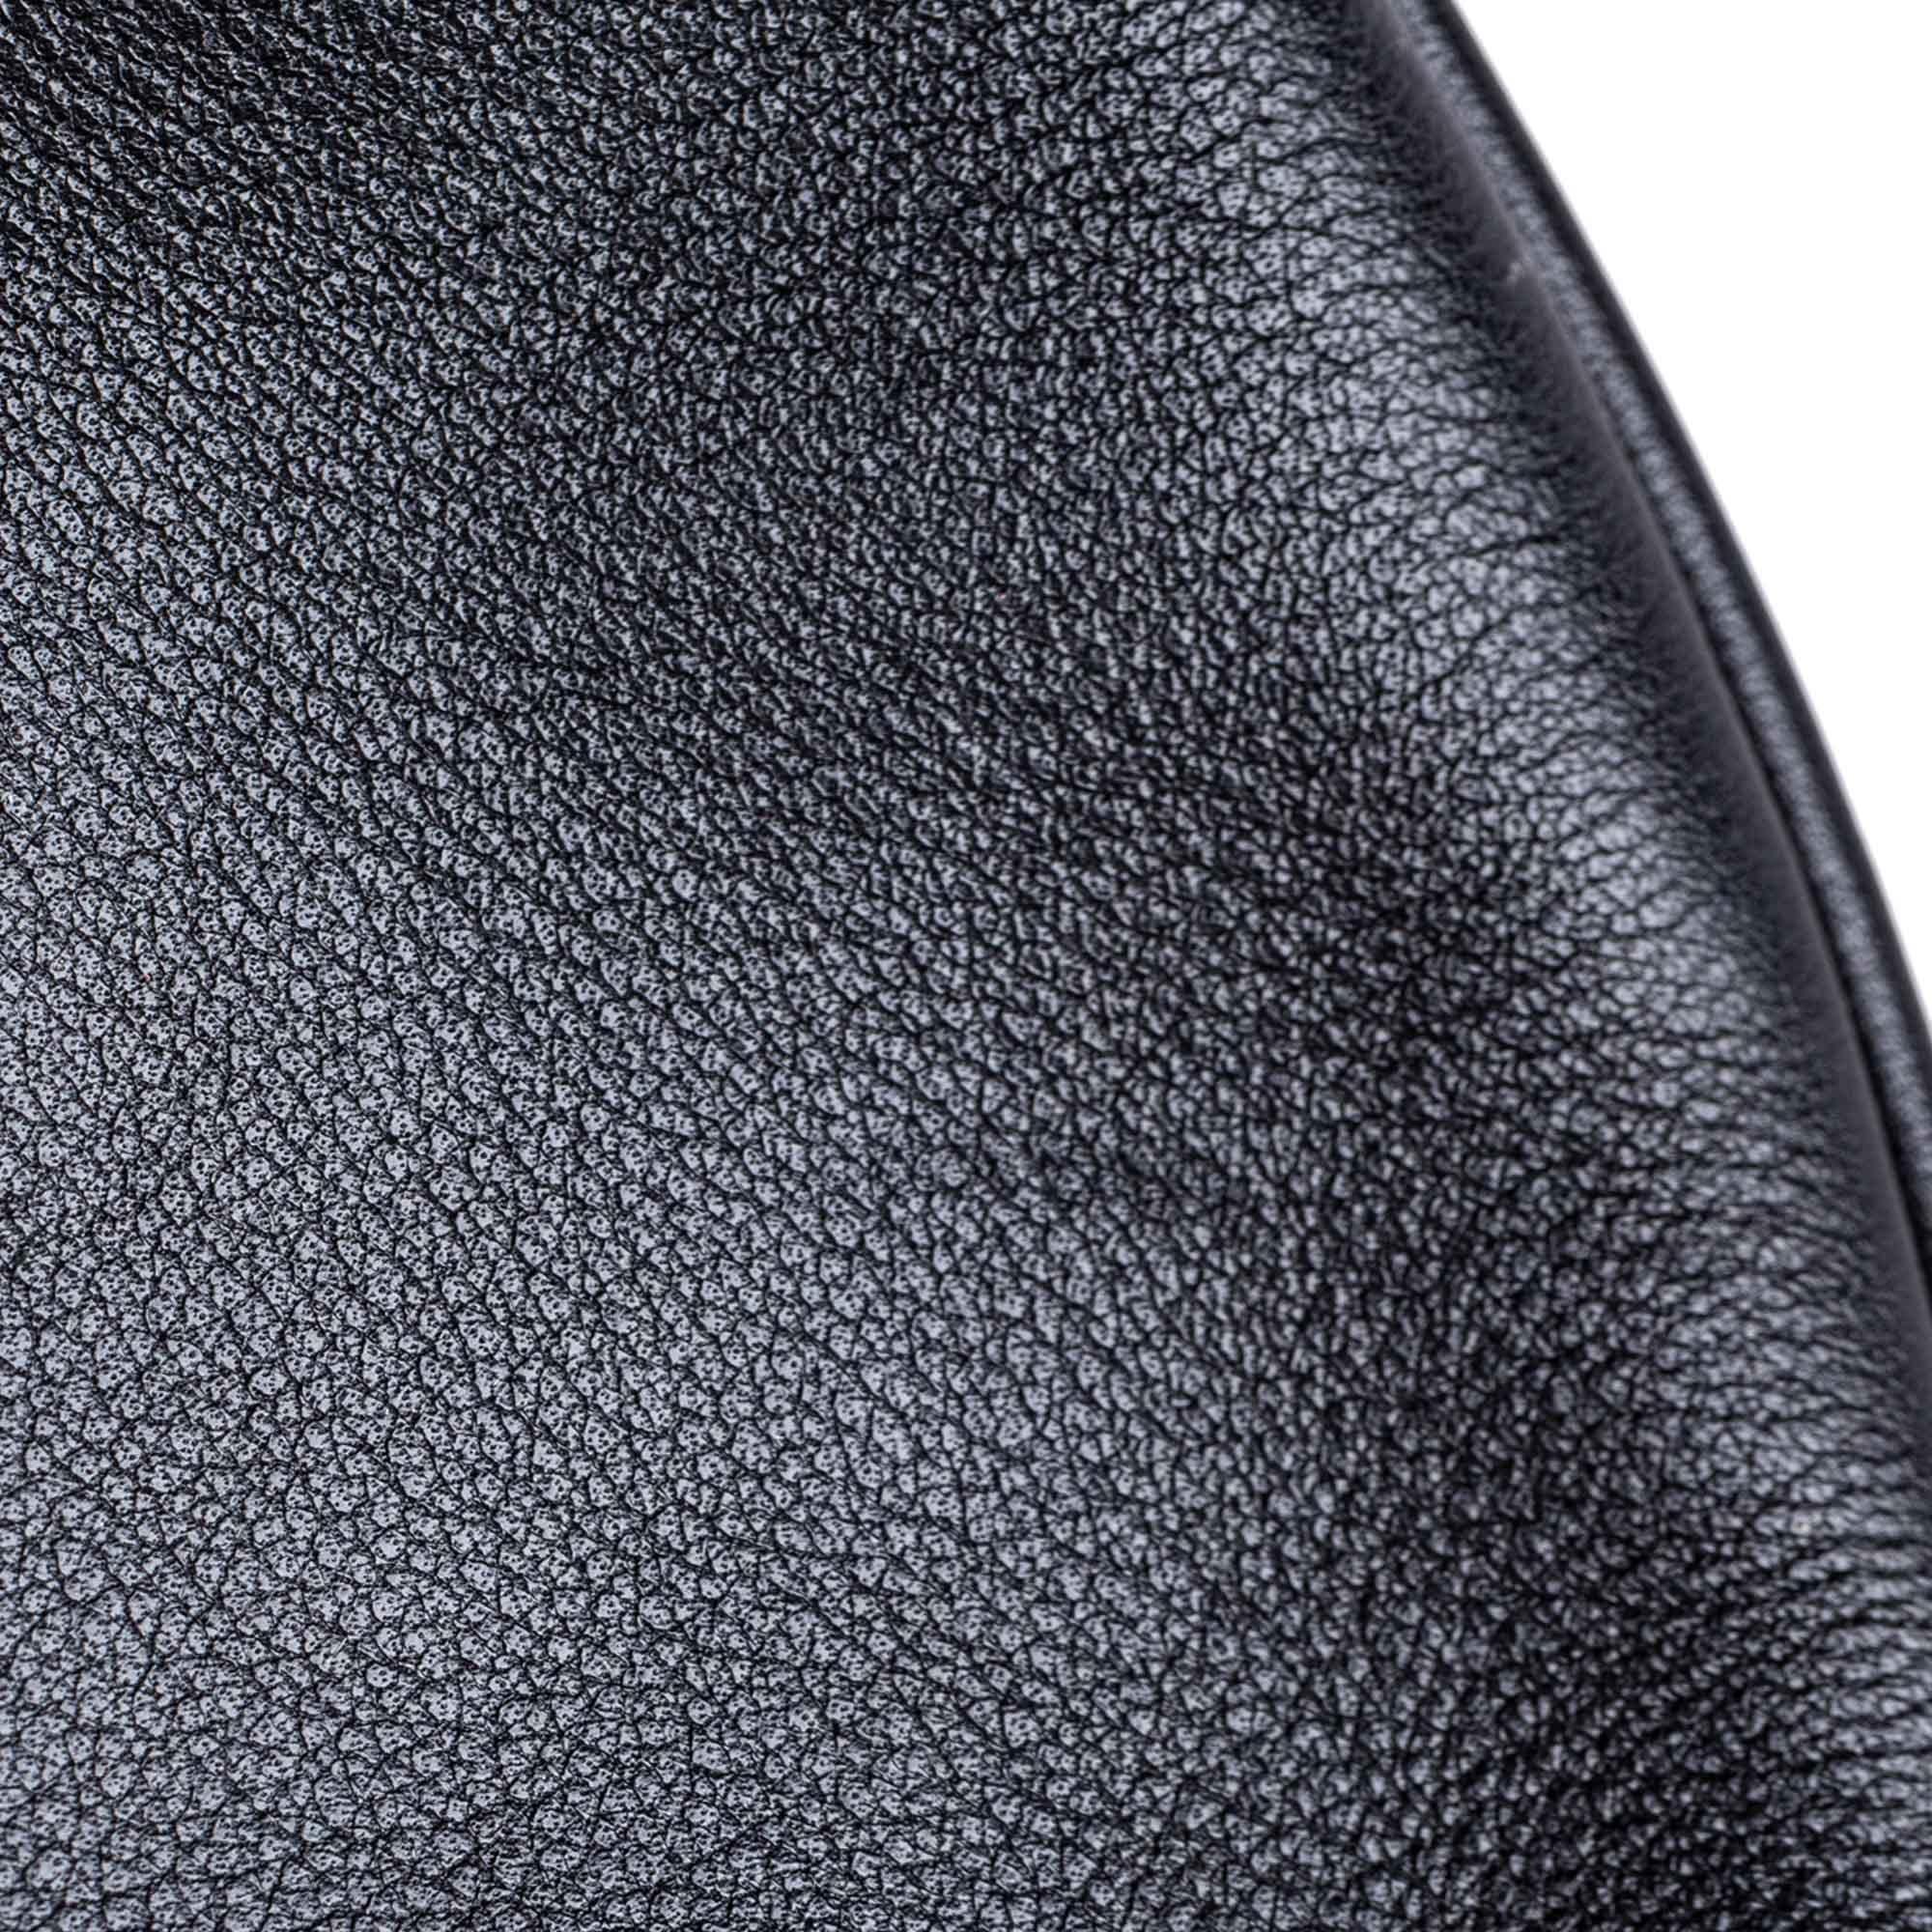 Vintage Authentic Gucci Black Leather Shoulder Bag Italy MEDIUM  For Sale 3